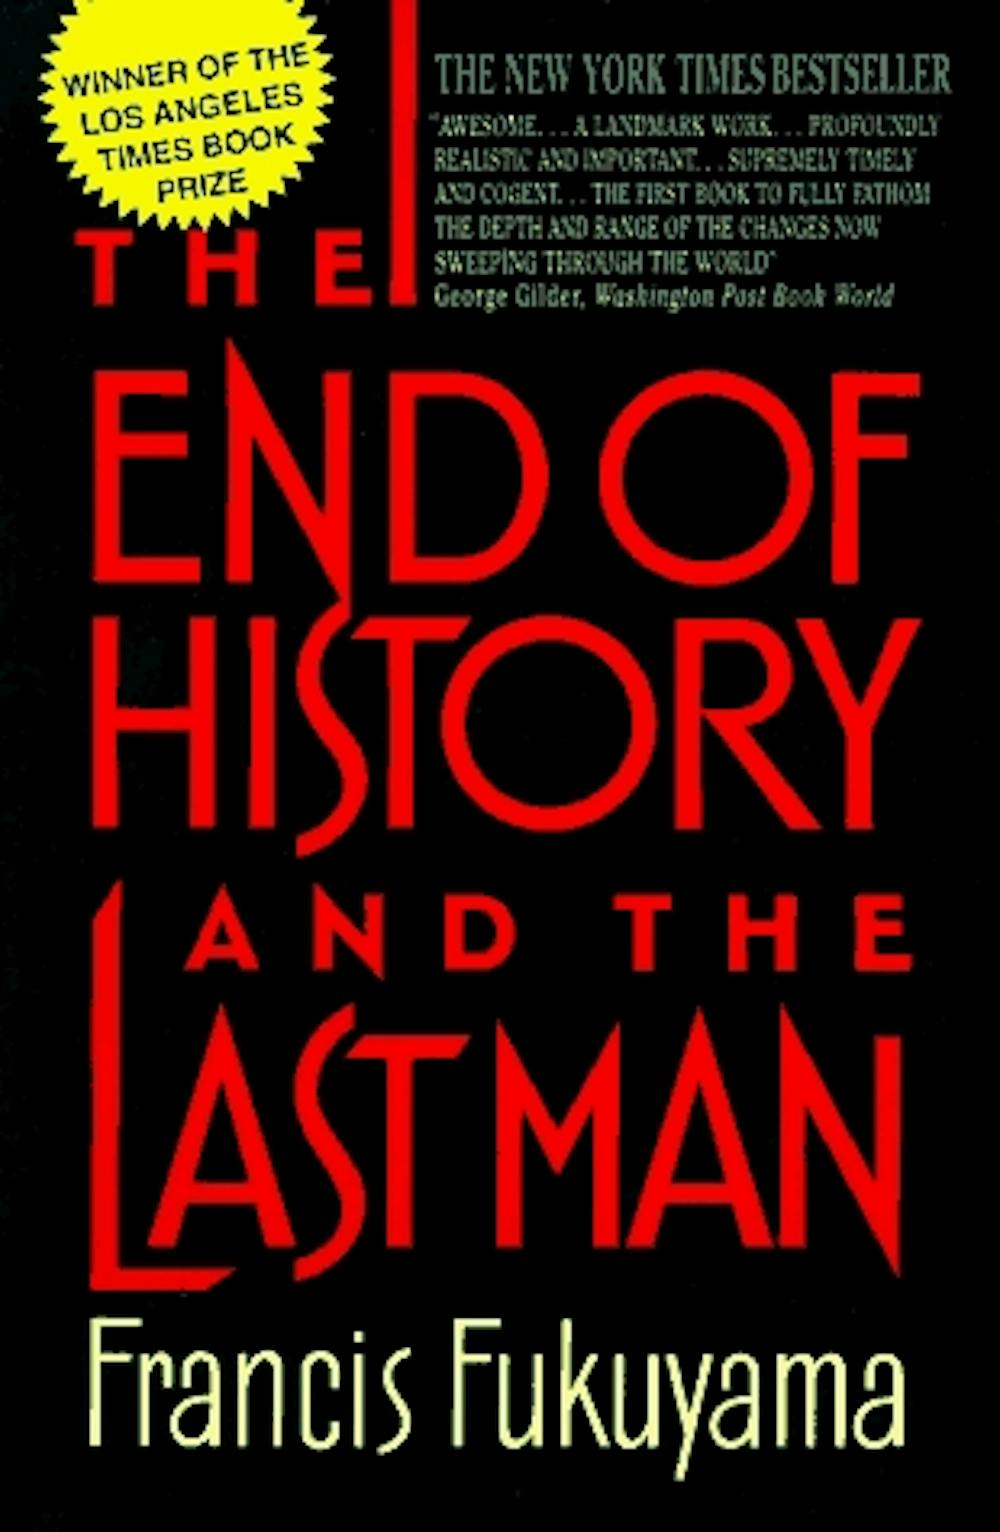 francis fukuyama's end of history thesis